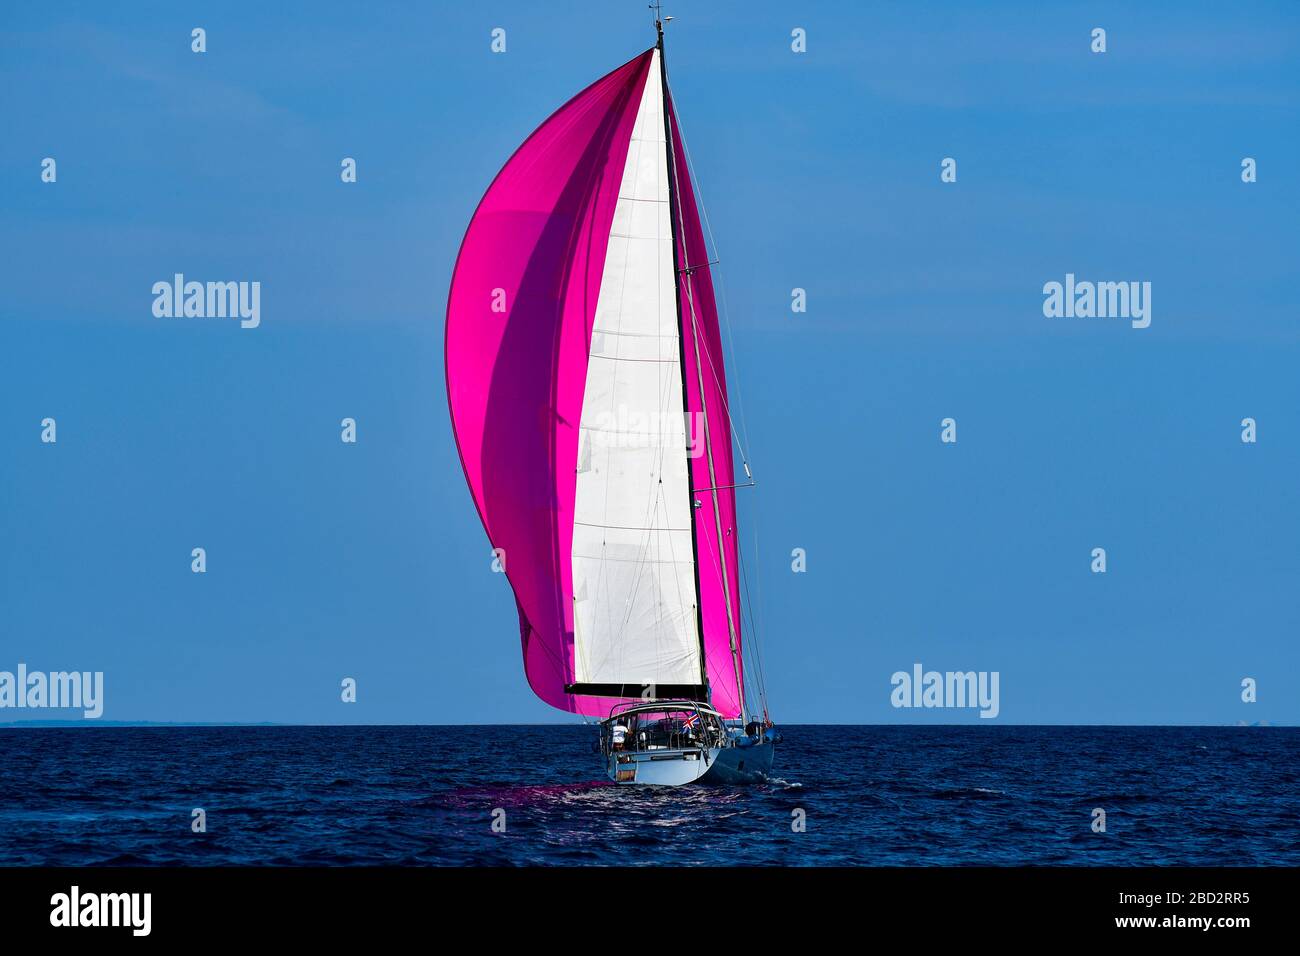 Segelboot auf offenem Meer mit großem purpurnen (rosa) Spinnaker Segel Stockfoto